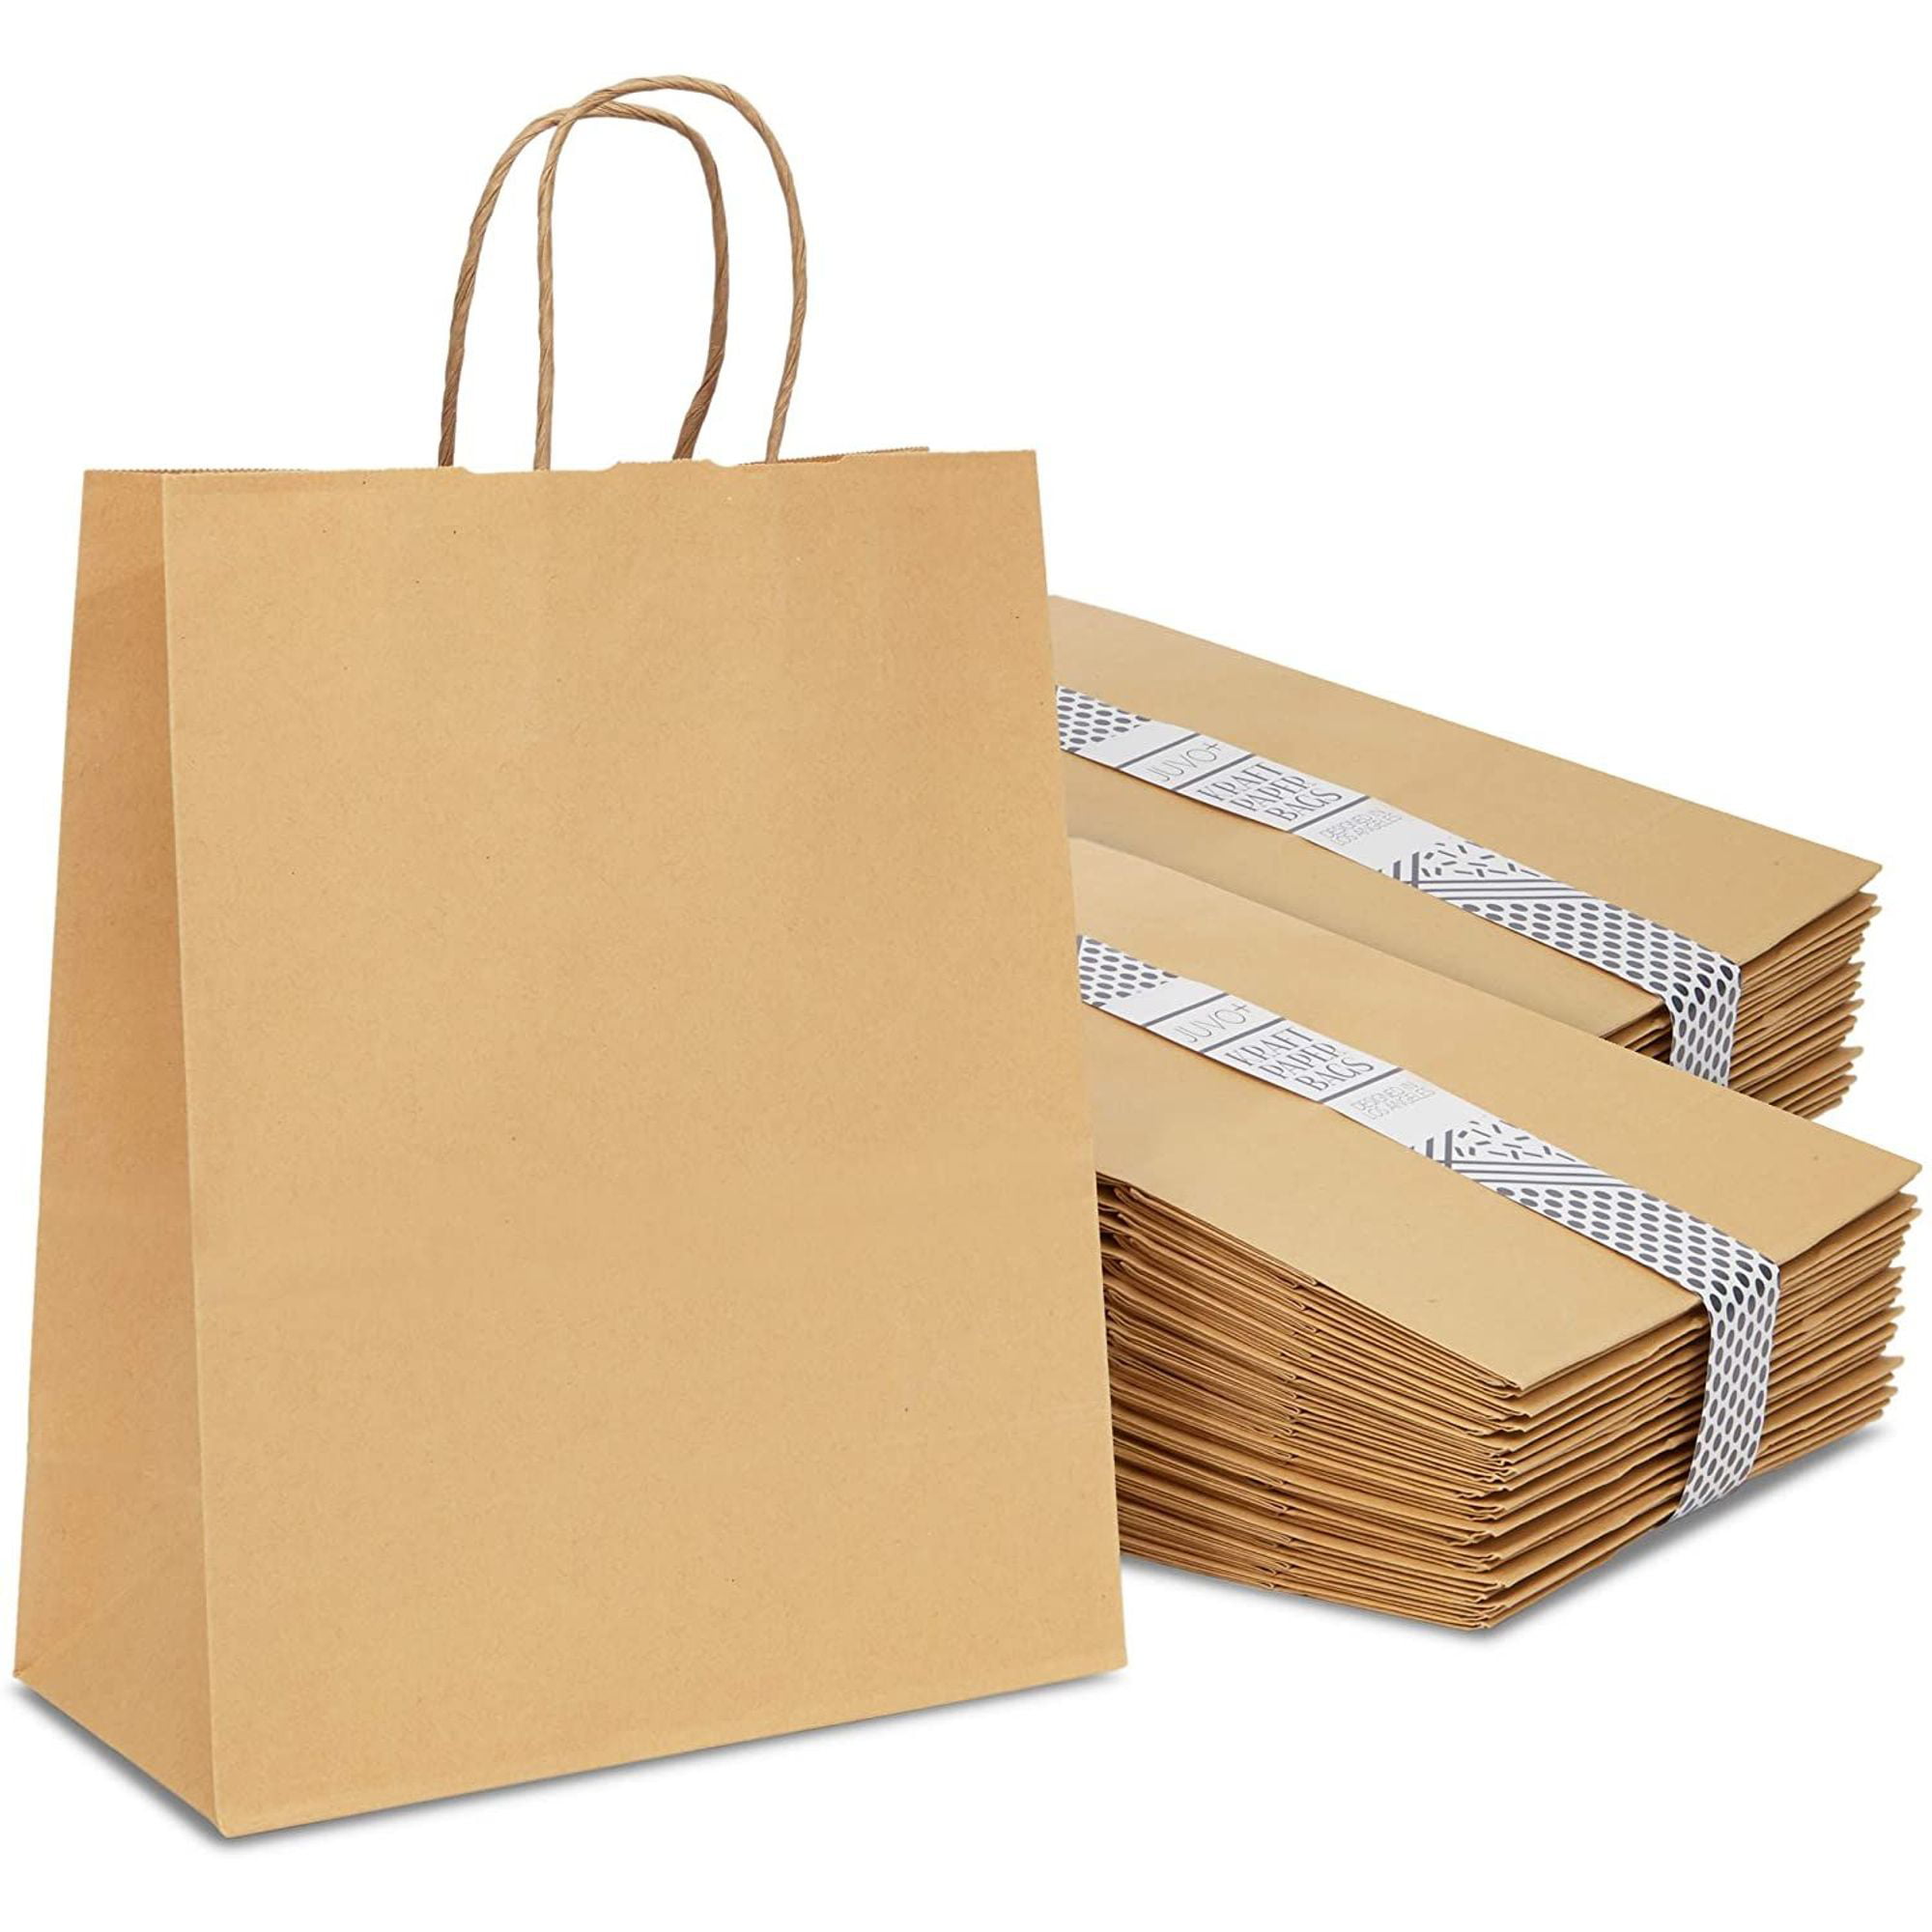 NEW LOT OF 50 Newsprint Paper Paper Shopping Gift bags 8X4X10  HANDLES 